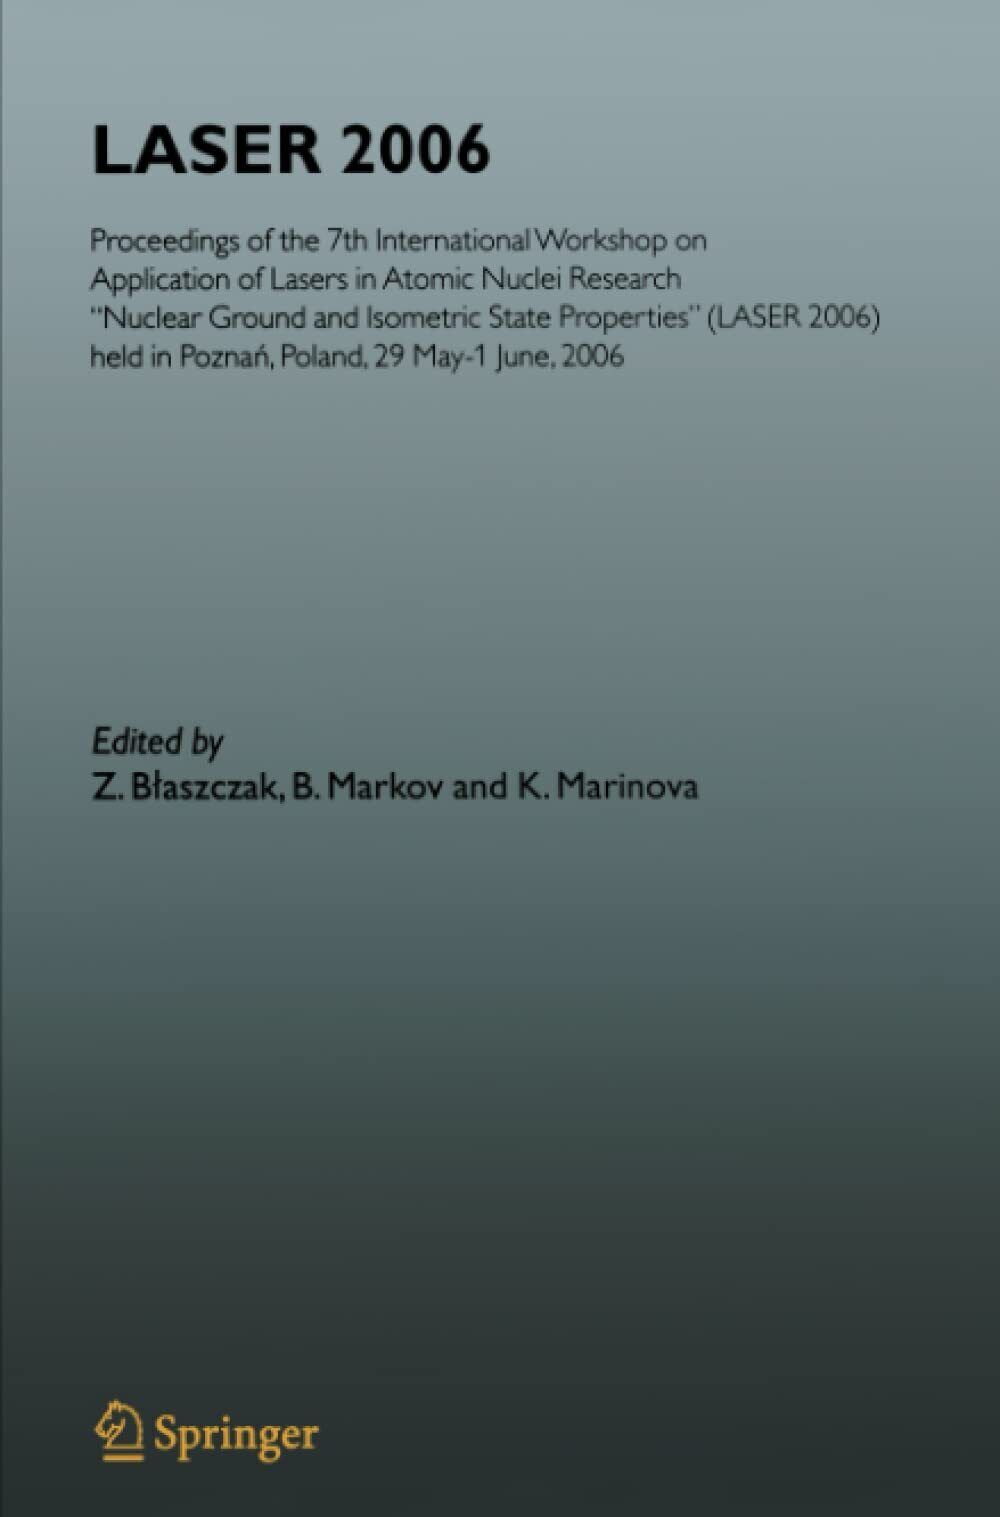 LASER 2006 - K. Marinova - Springer, 2010